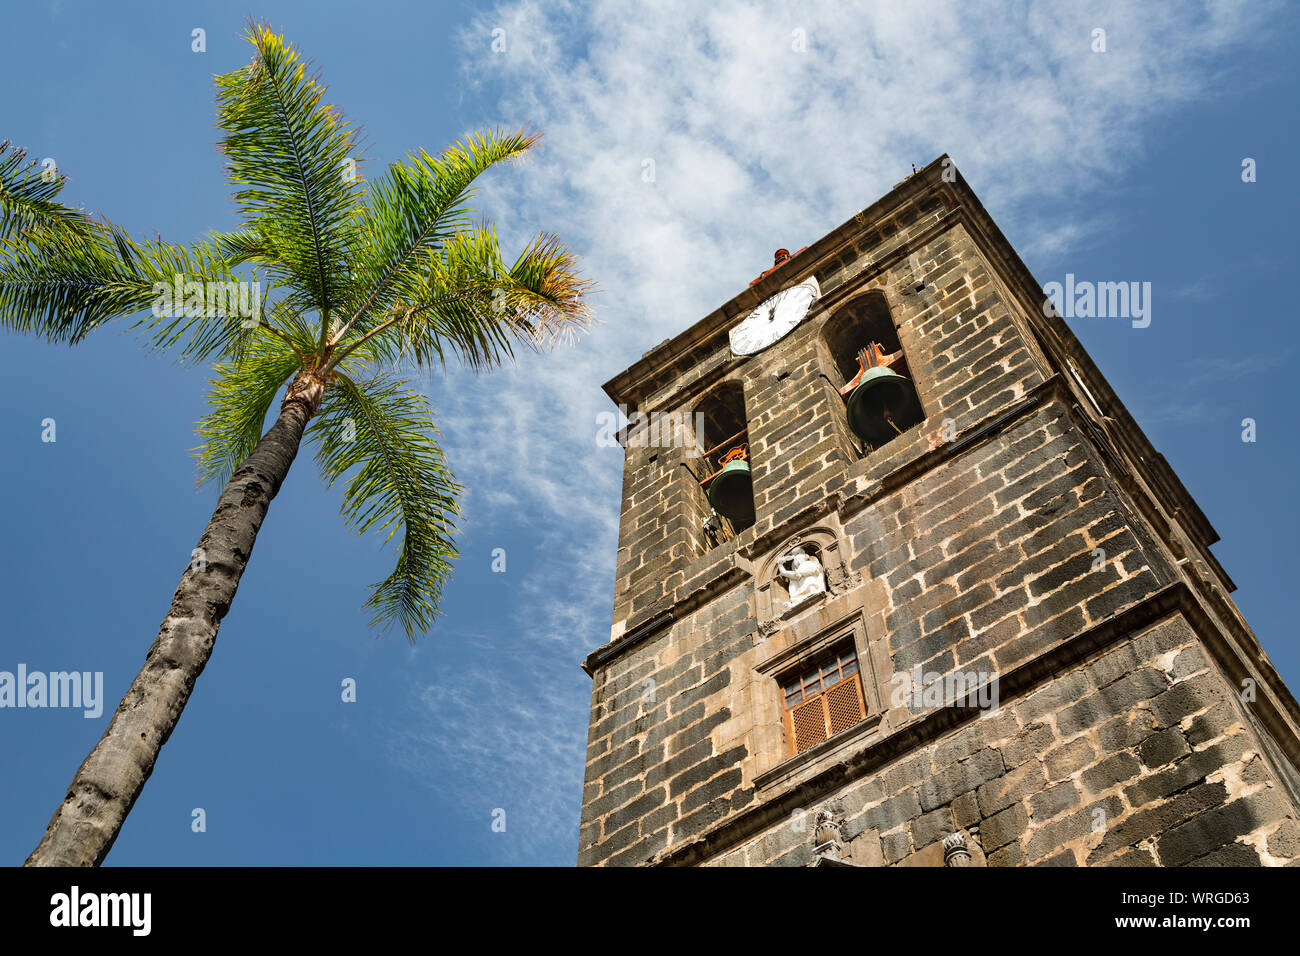 The tower of the church Iglesia Matriz de El Salvador with a palm tree and blue sky in Santa Cruz de La Palma, Spain. Stock Photo